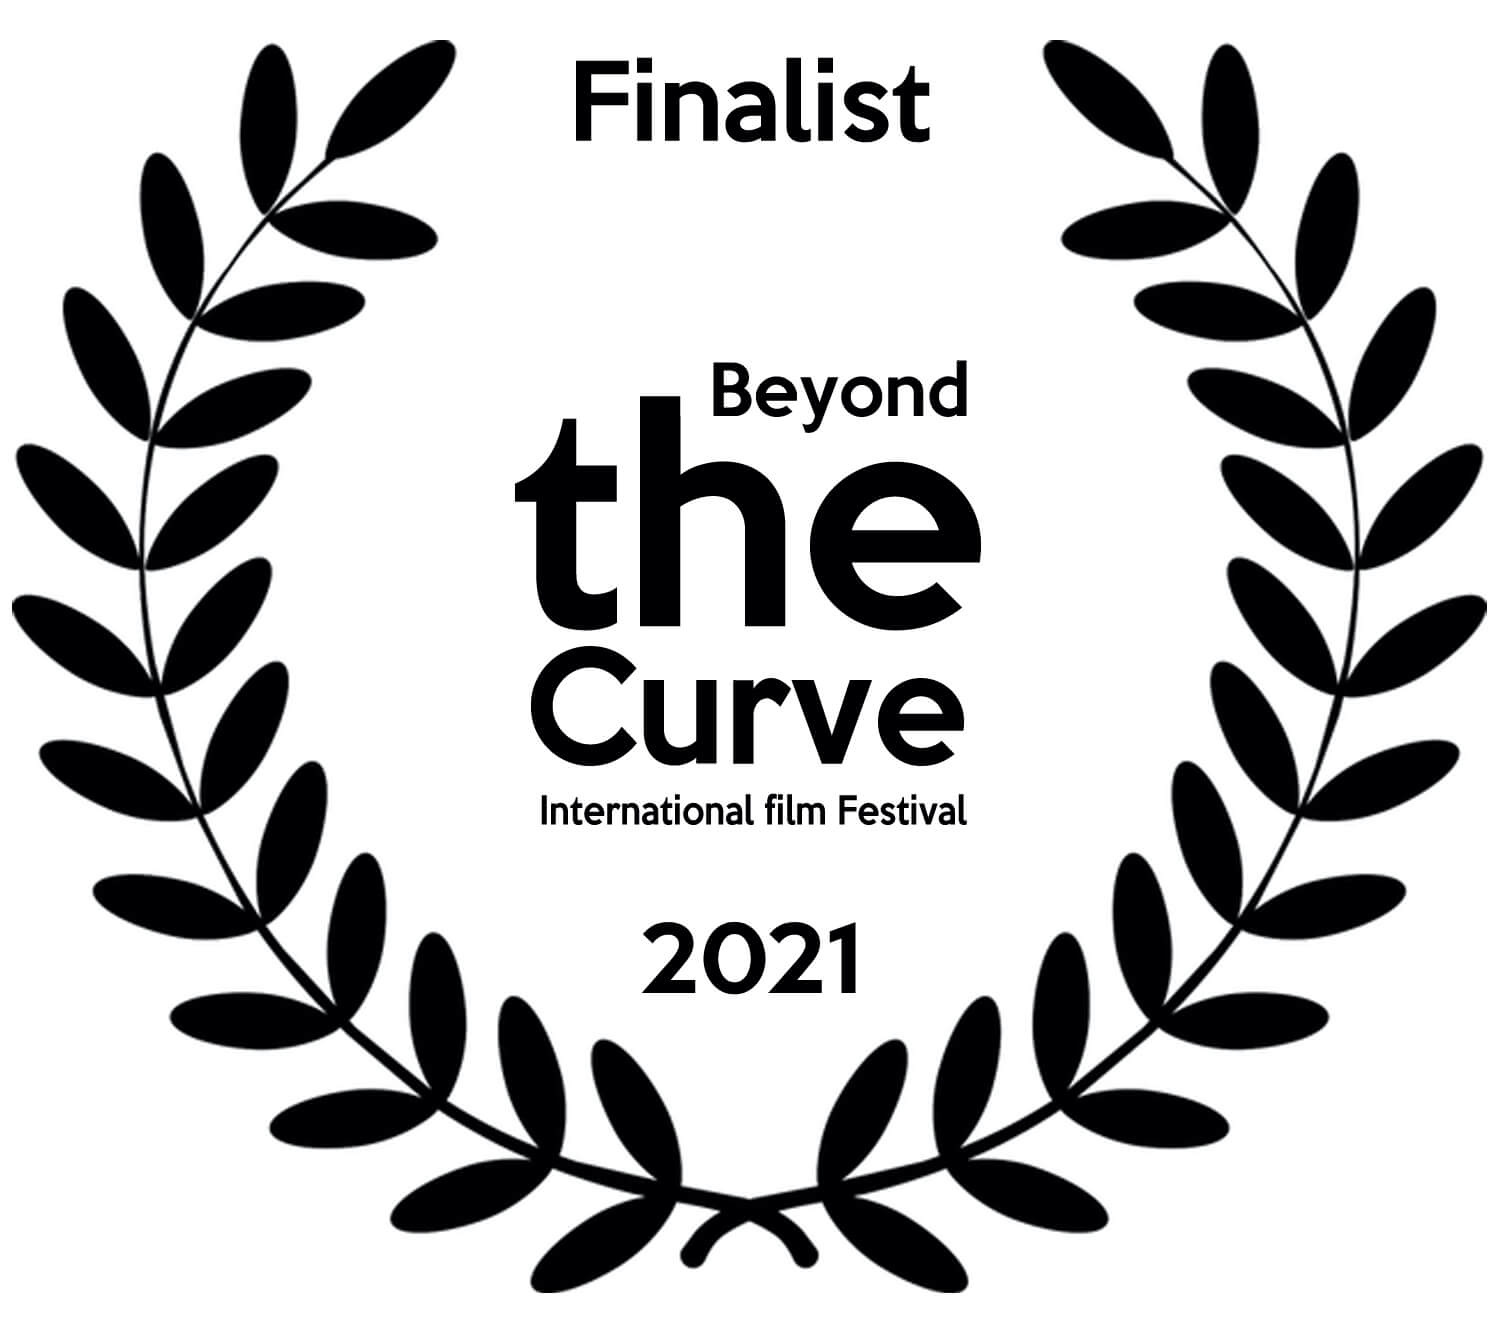 Finalist Beyond the Curve